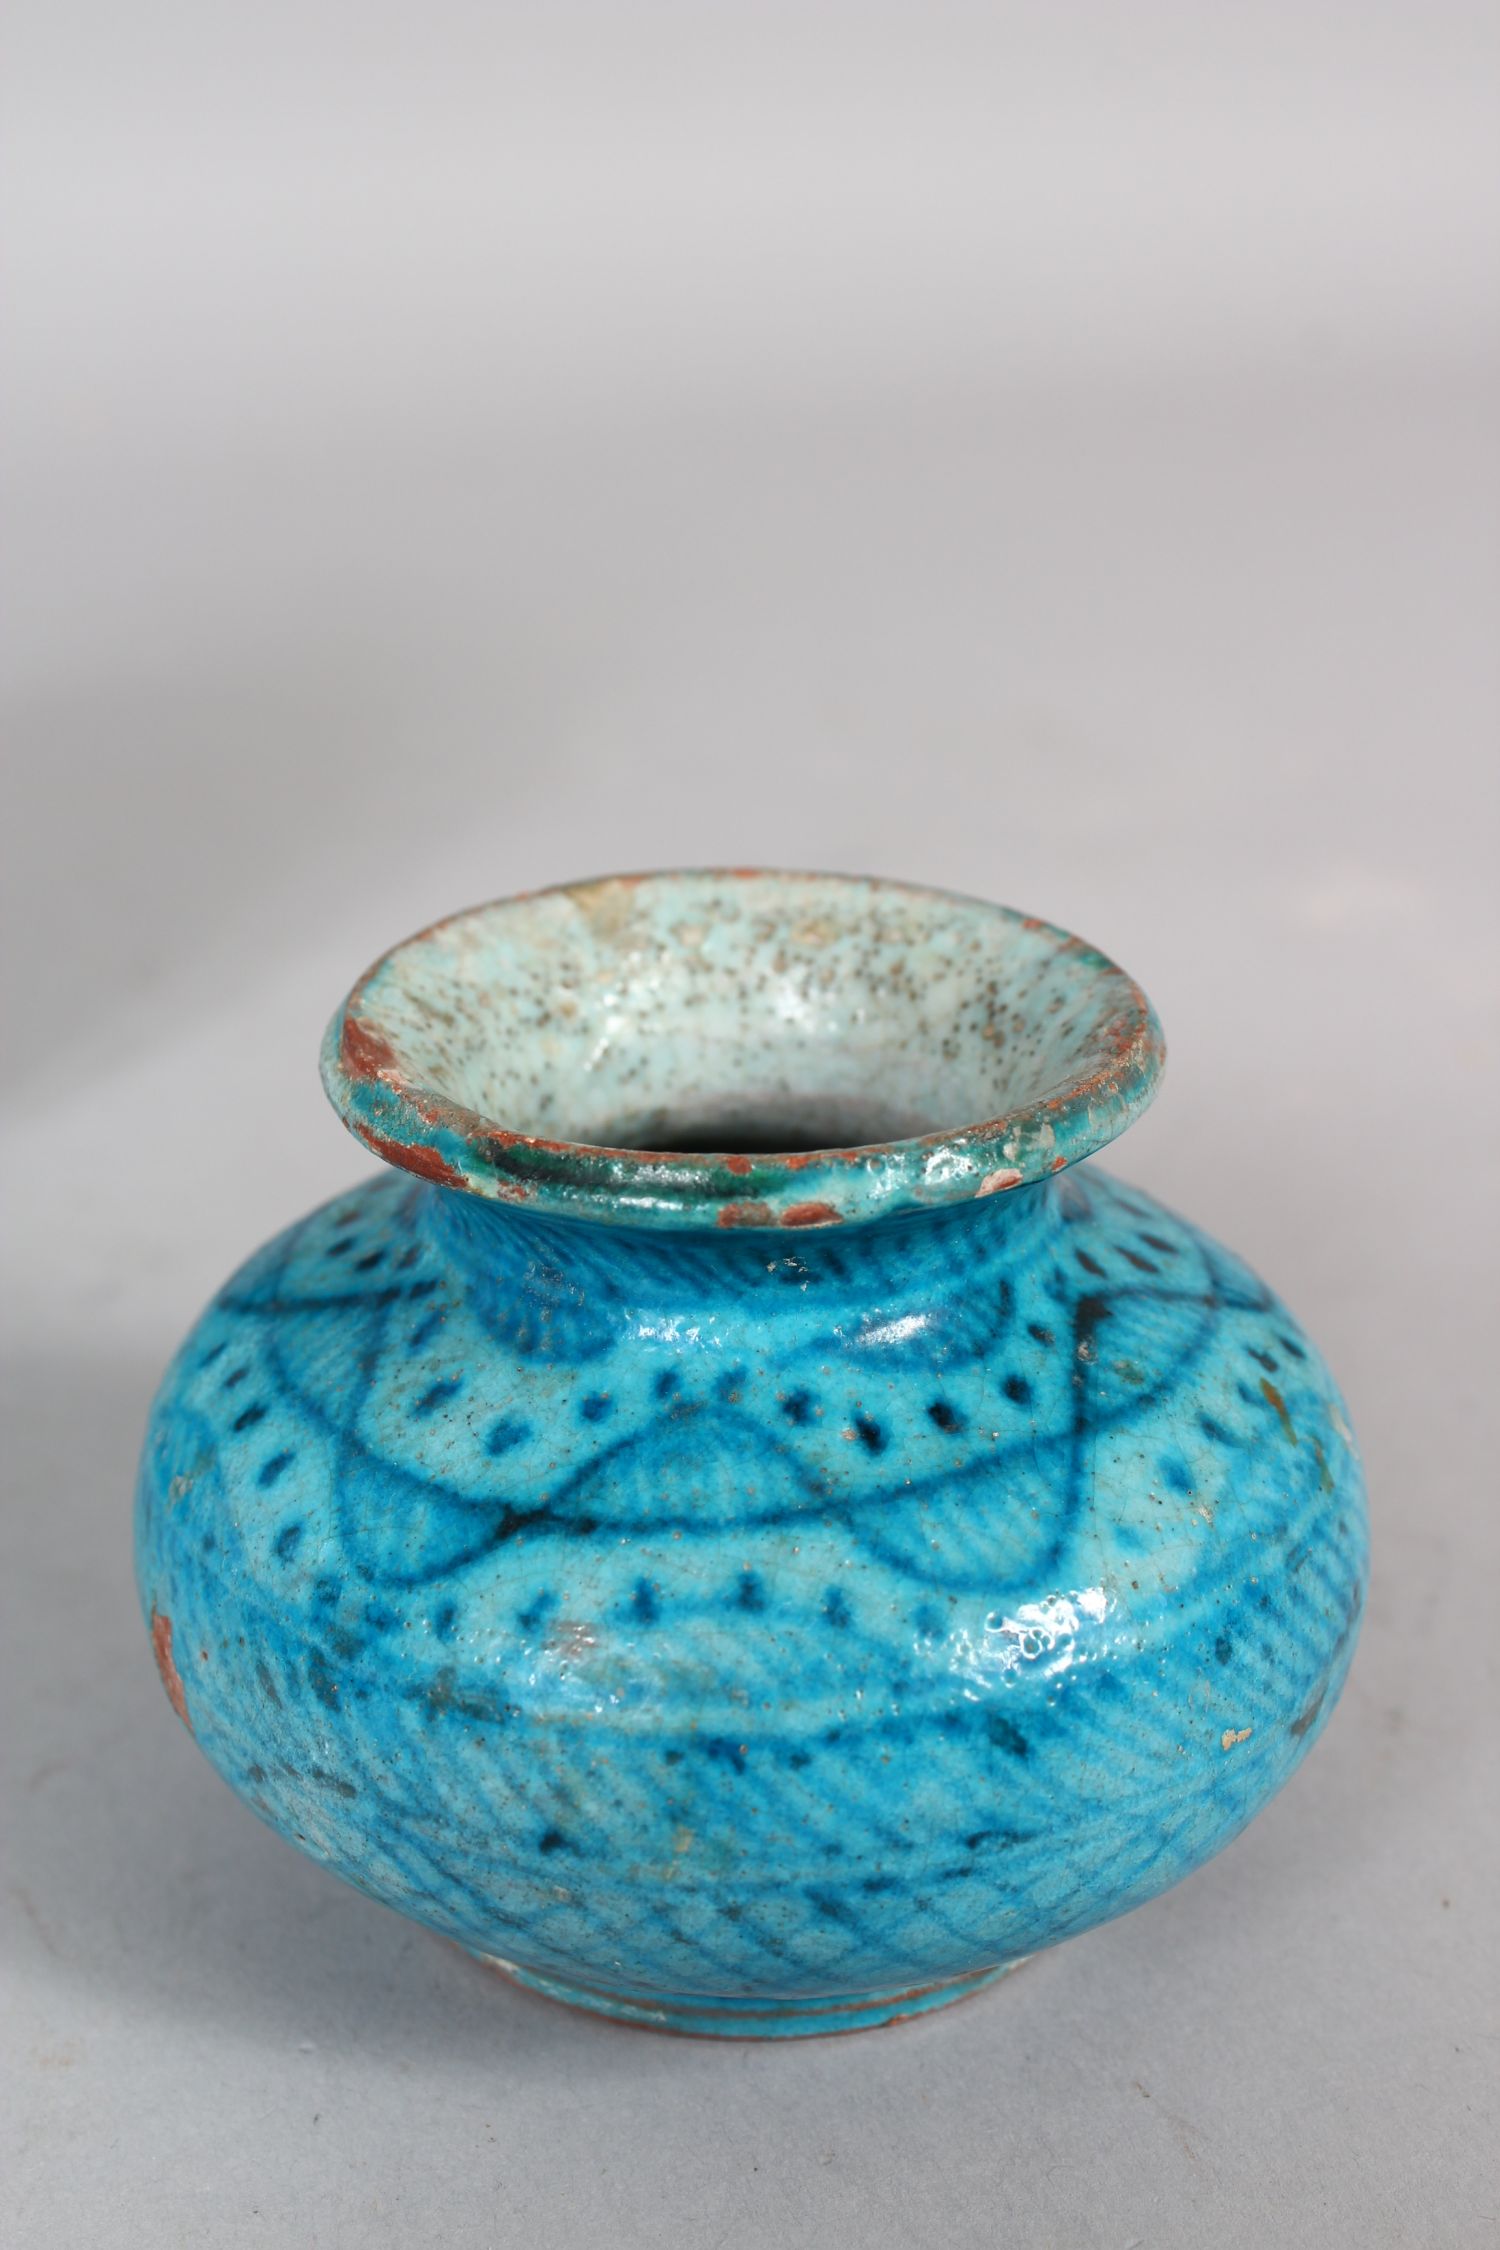 TWO 16TH CENTURY PERSIAN KUBACHI POTTERY SAUCERS and ink pot, saucer 13cm diameter, pot 6cm high. - Image 2 of 4